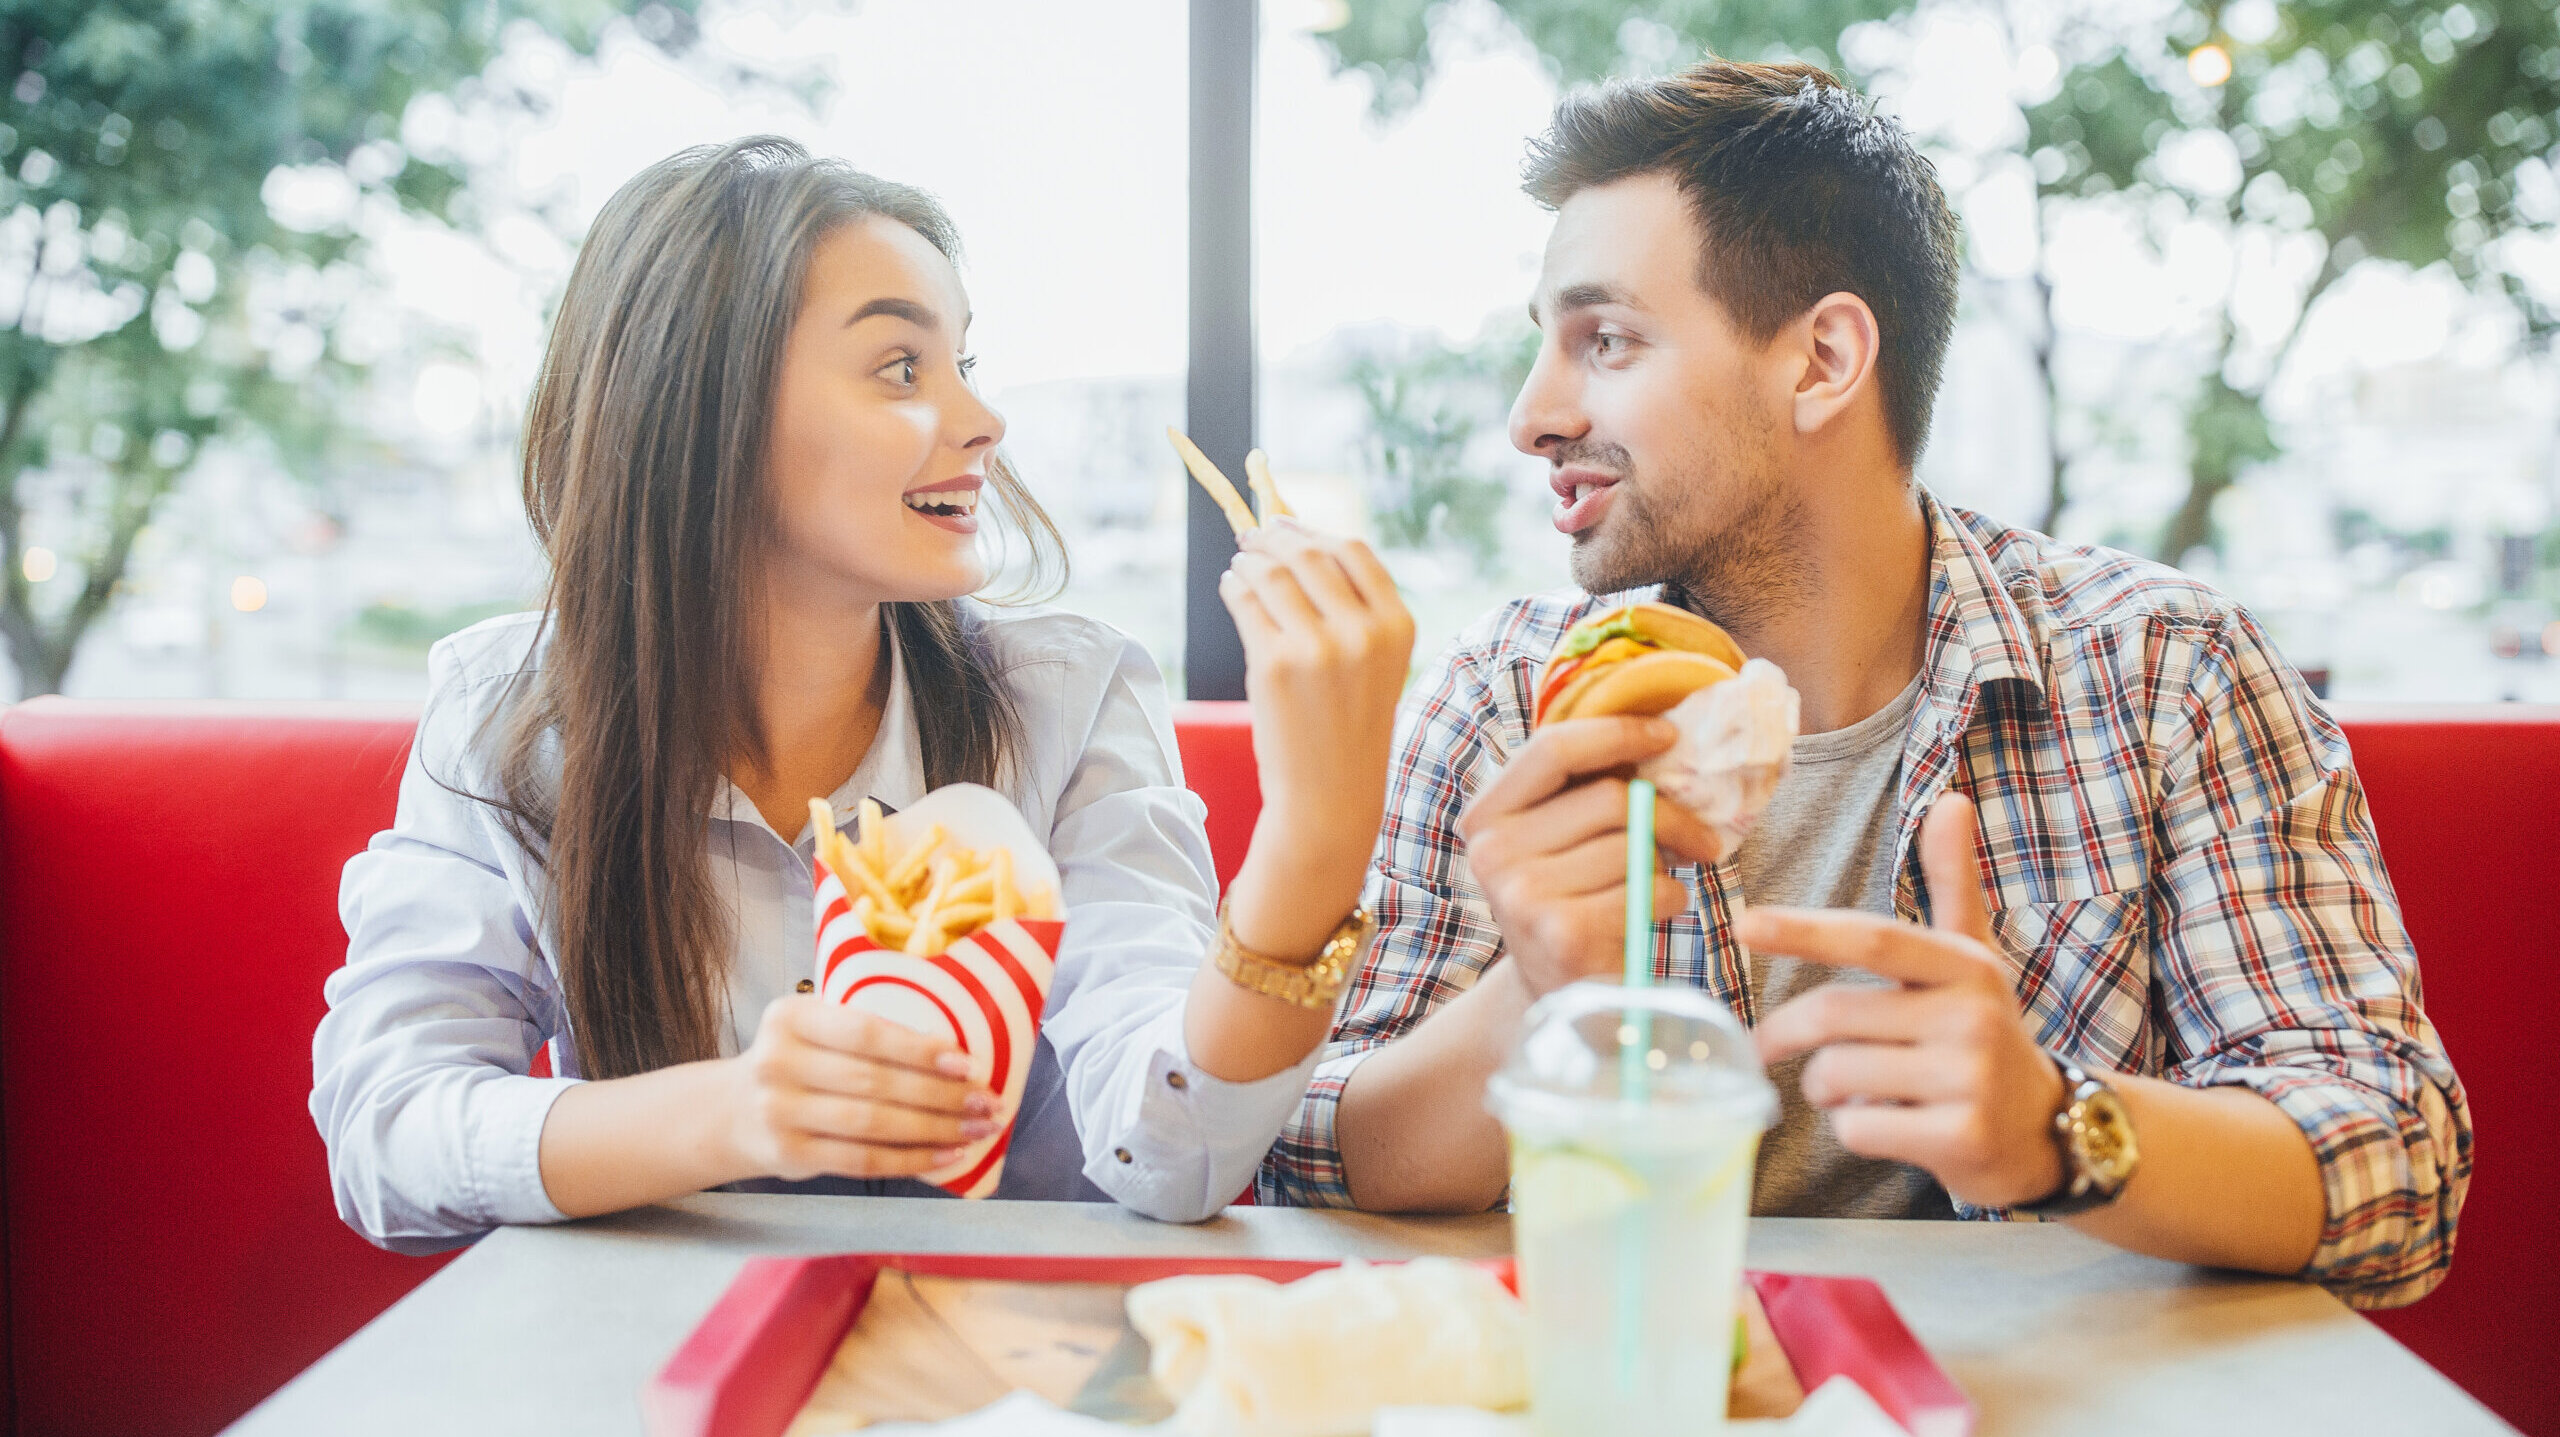 Friends eat fries, burger at fast food restaurant